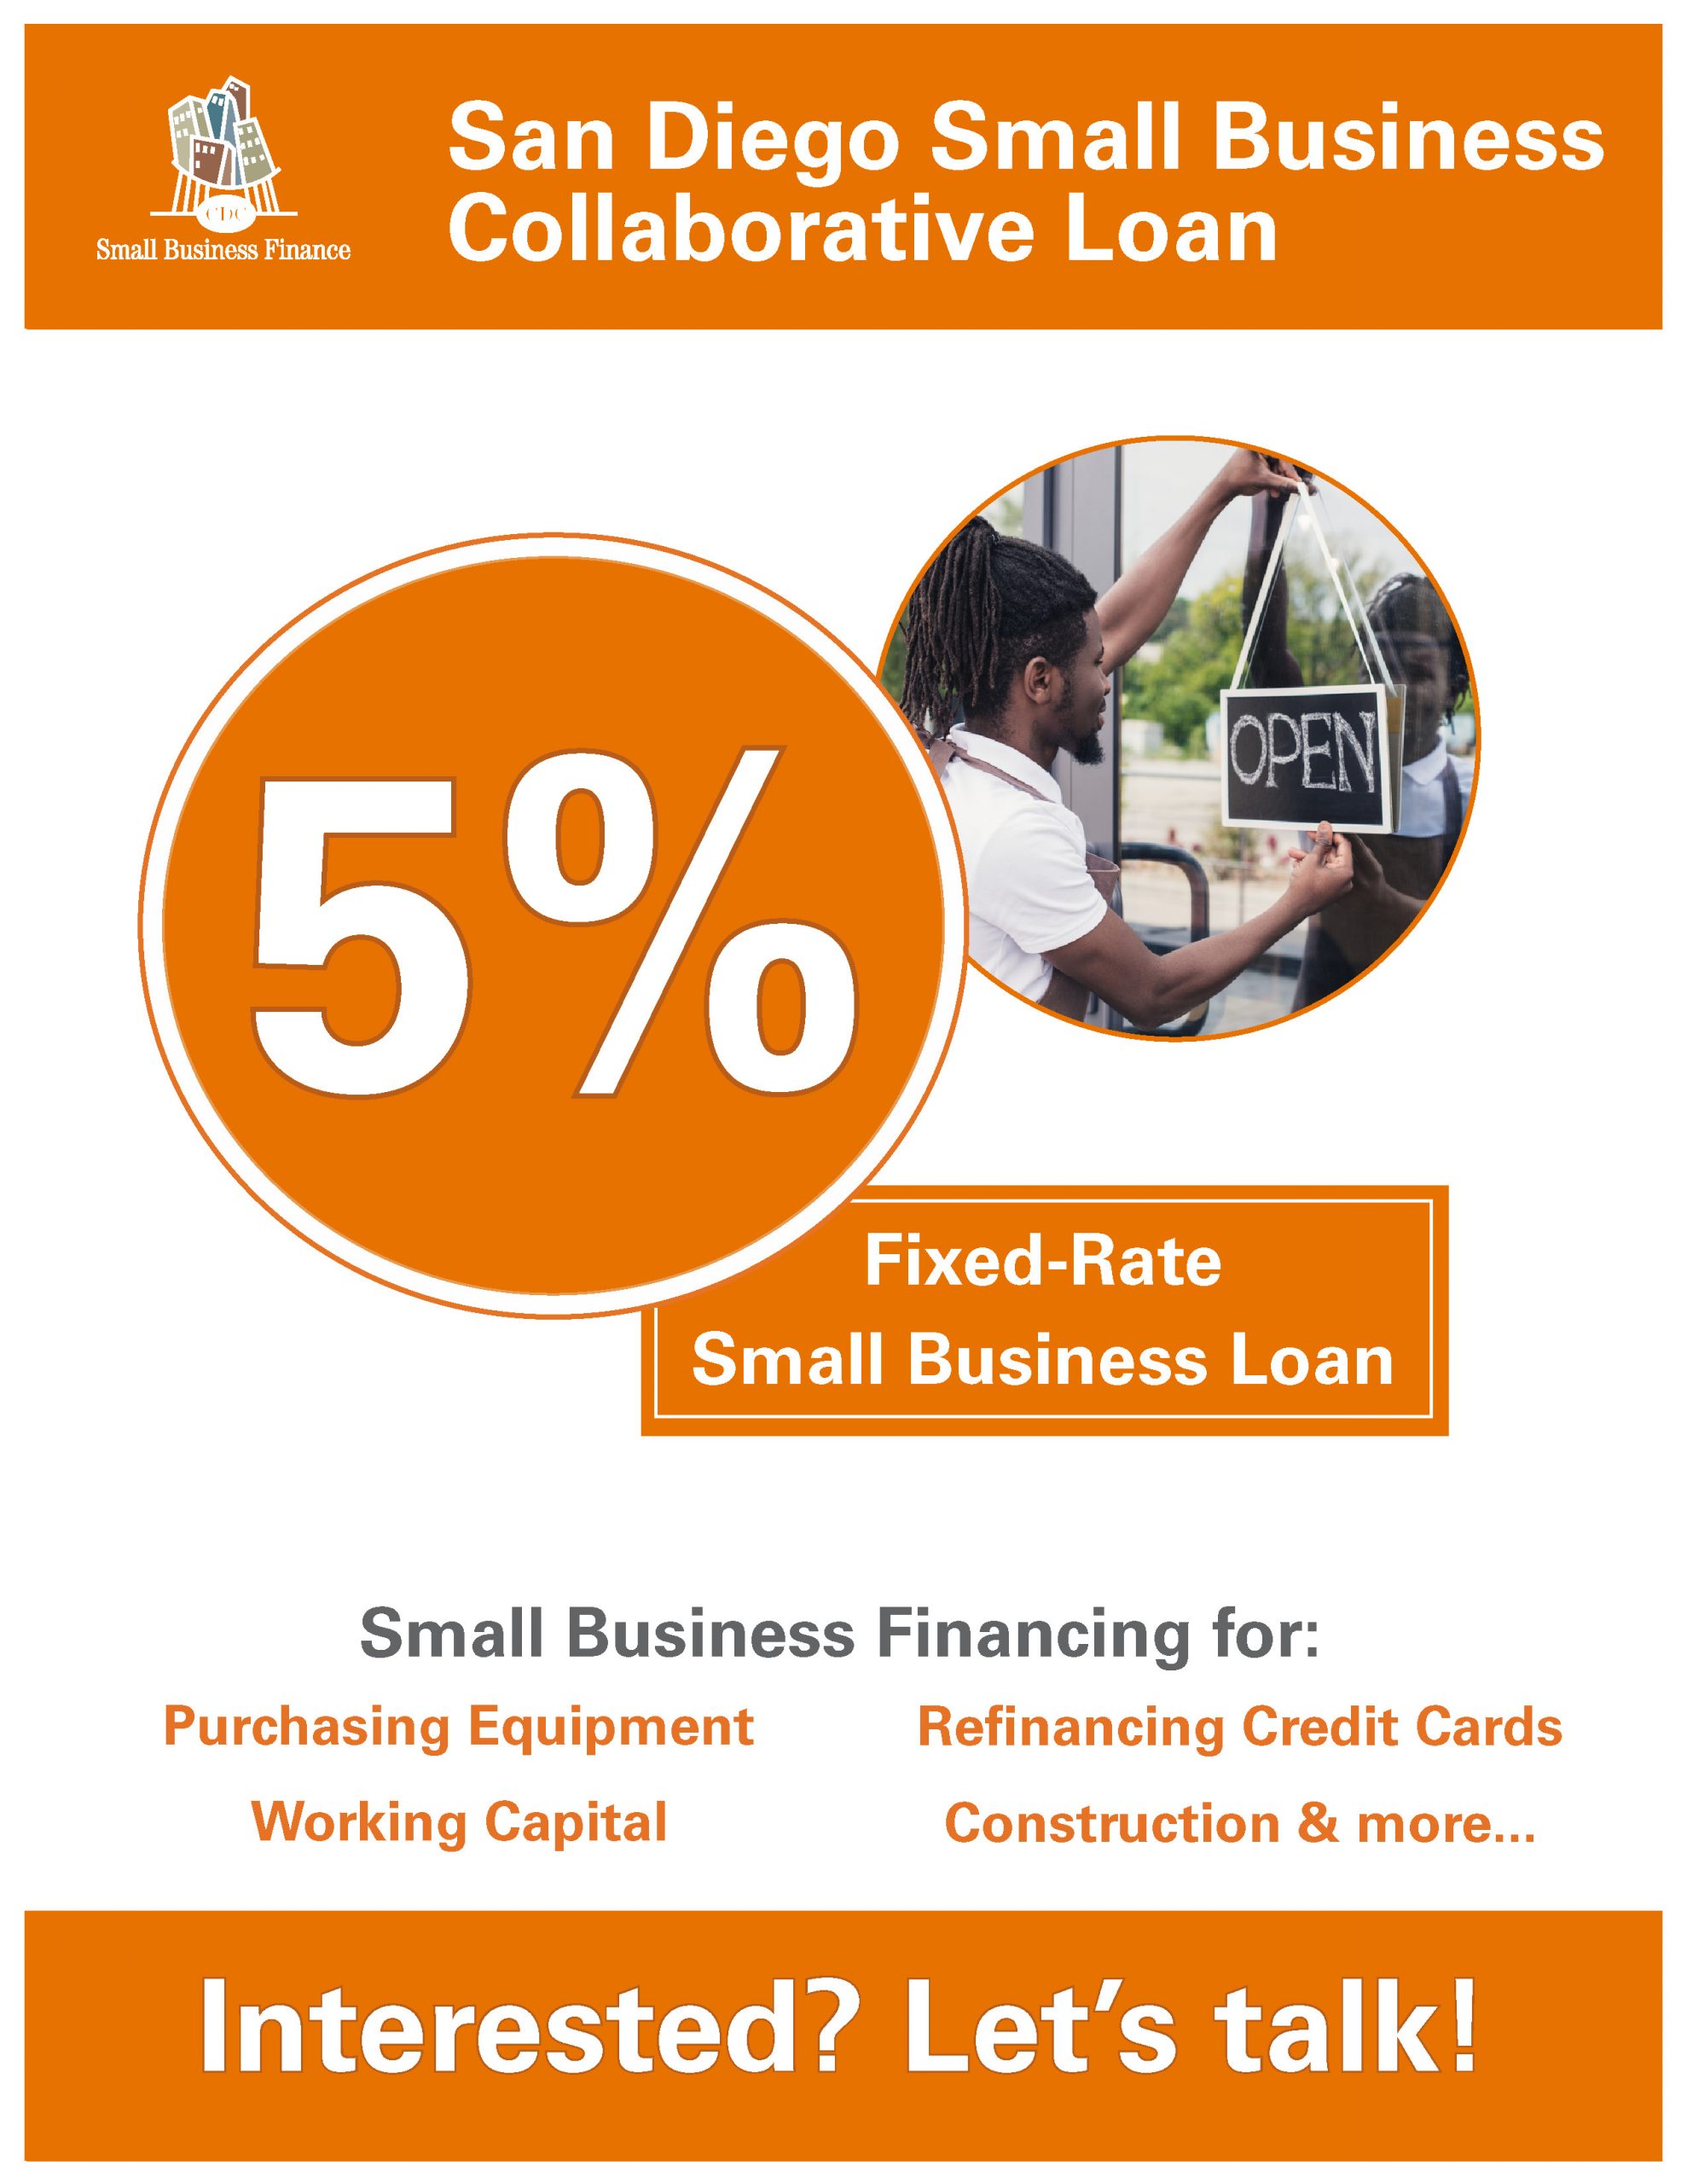 San Diego Small Business Collaborative Loan North Park Main Street